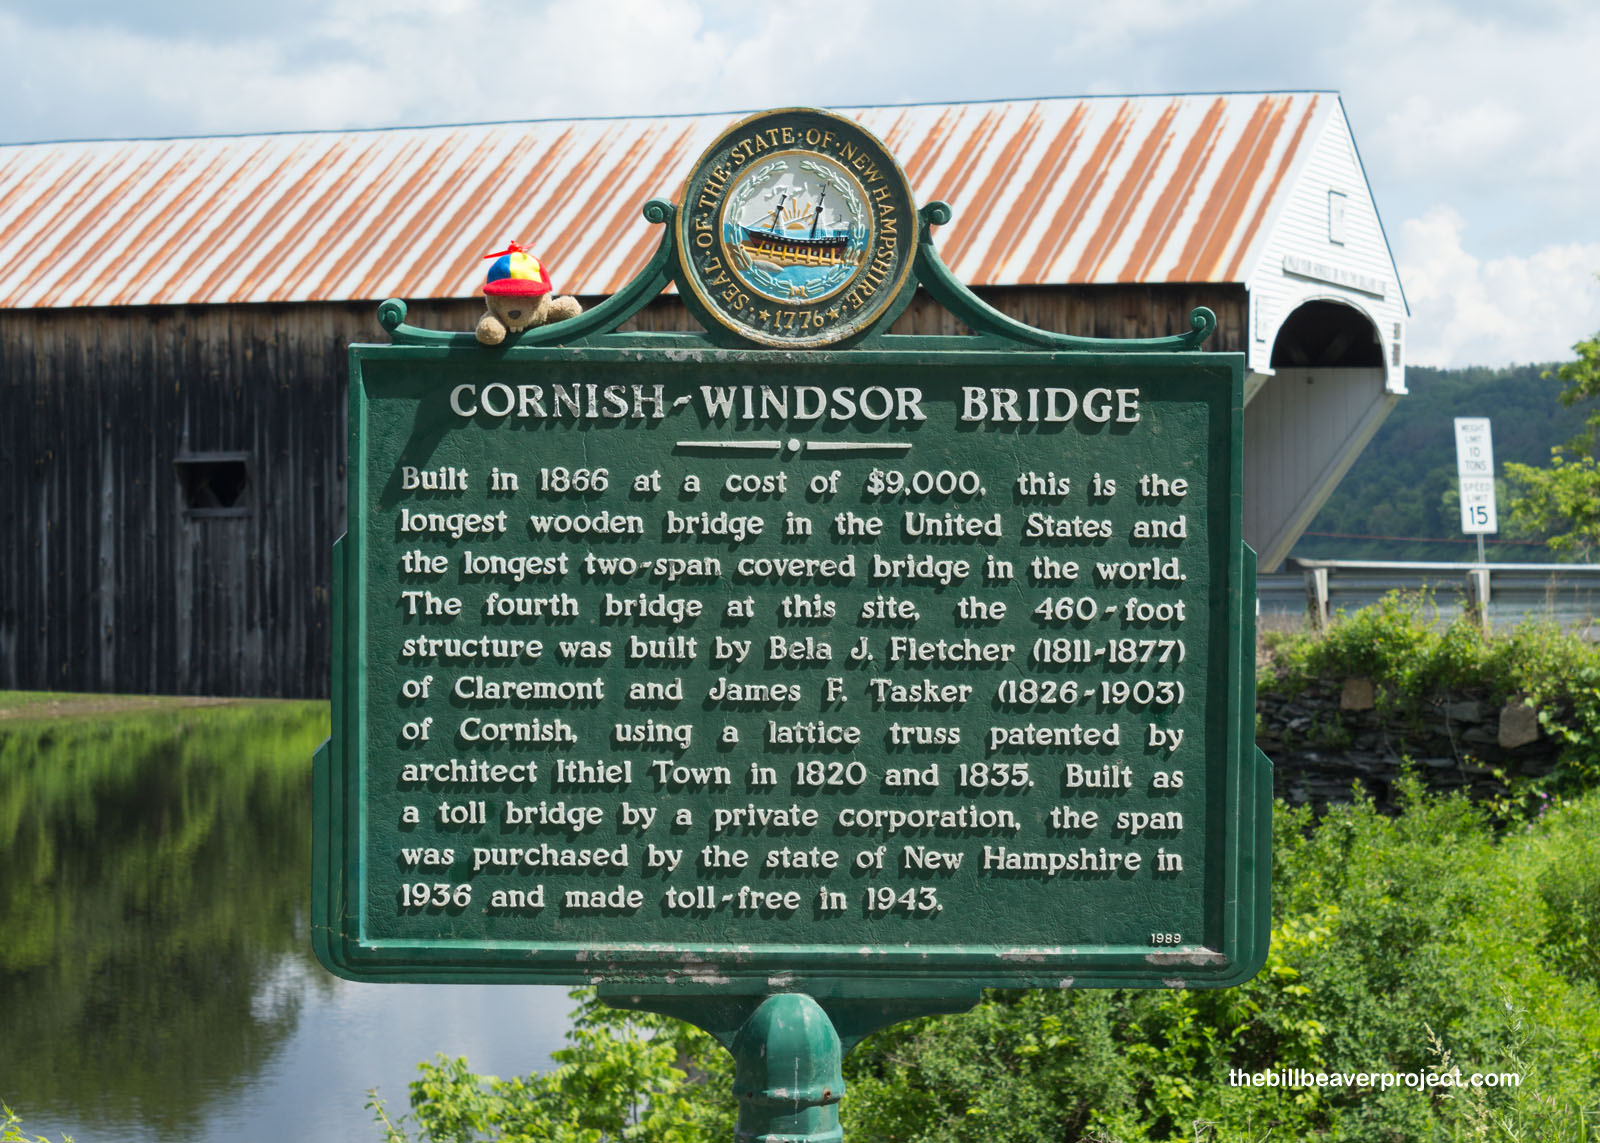 Cornish-Windsor Bridge